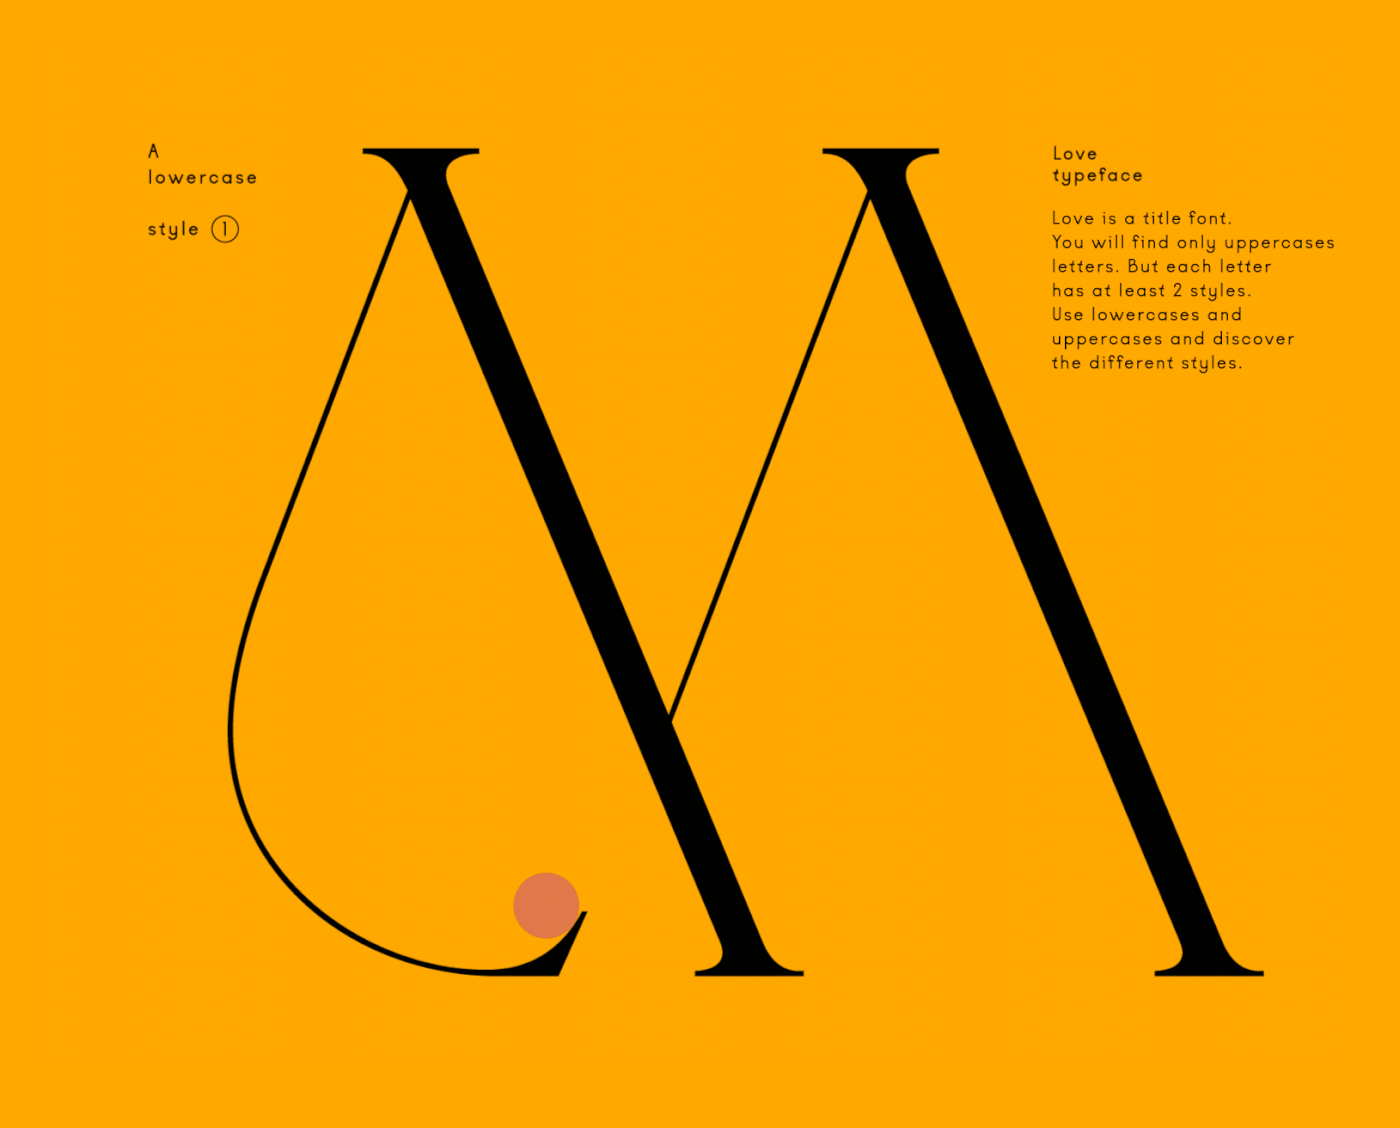 vj-type Violaine & Jeremy font type Typeface vj-type.com love font Love type serif typography  